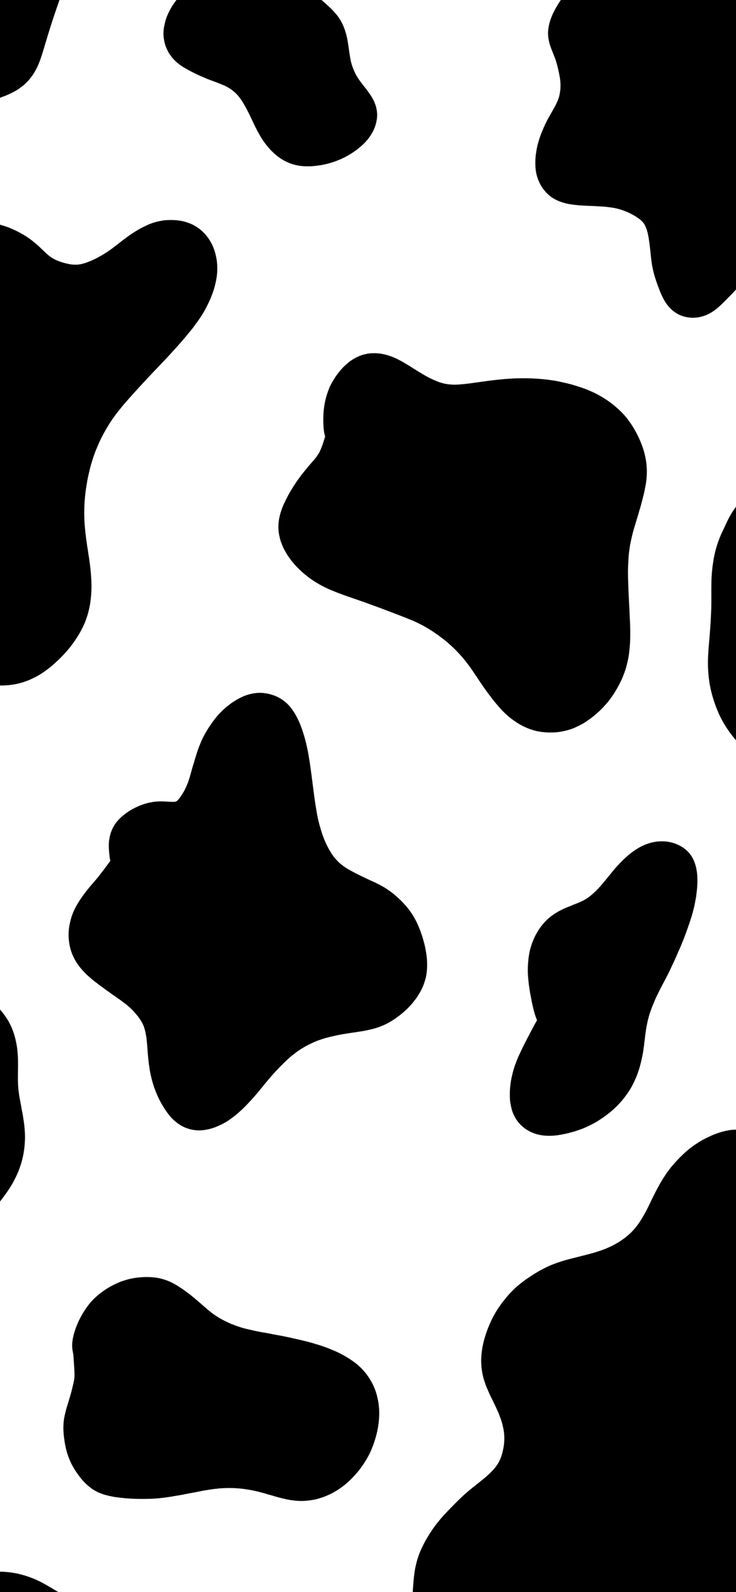 Cow Wallpaper. Cow wallpaper, Cute simple wallpaper, Preppy wallpaper. Wallpaper iphone boho, Cow wallpaper, Cow print wallpaper